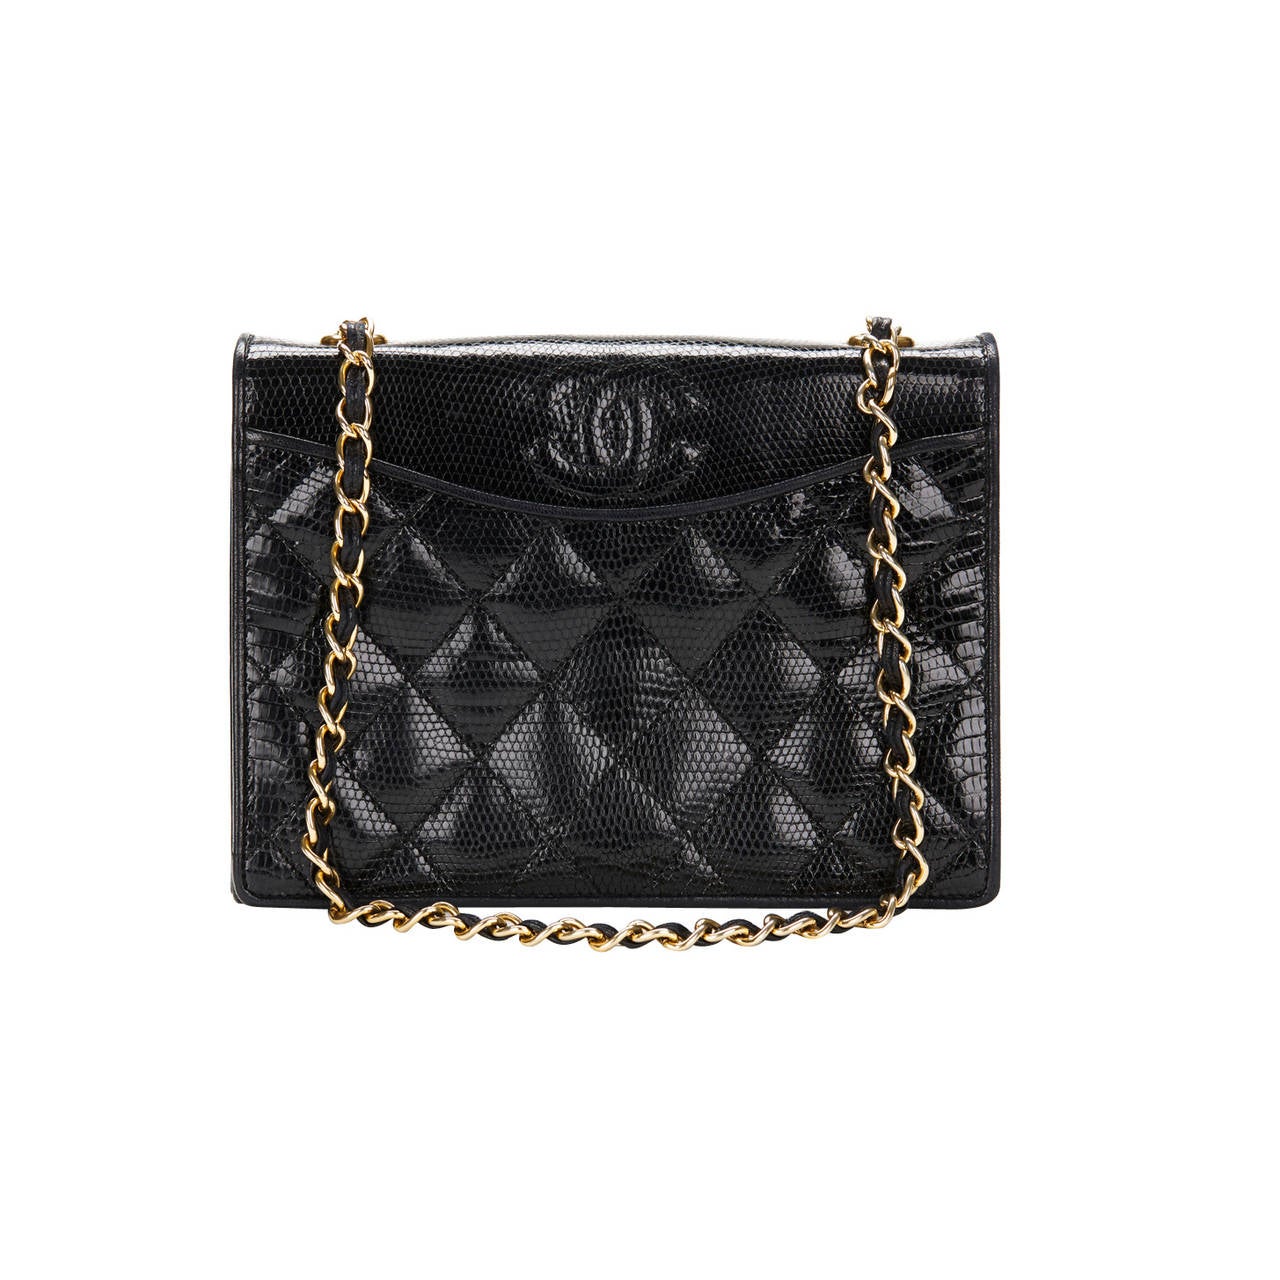 1990s Chanel Black Exotic Lizard Skin Leather Vintage Evening CC Flap Bag